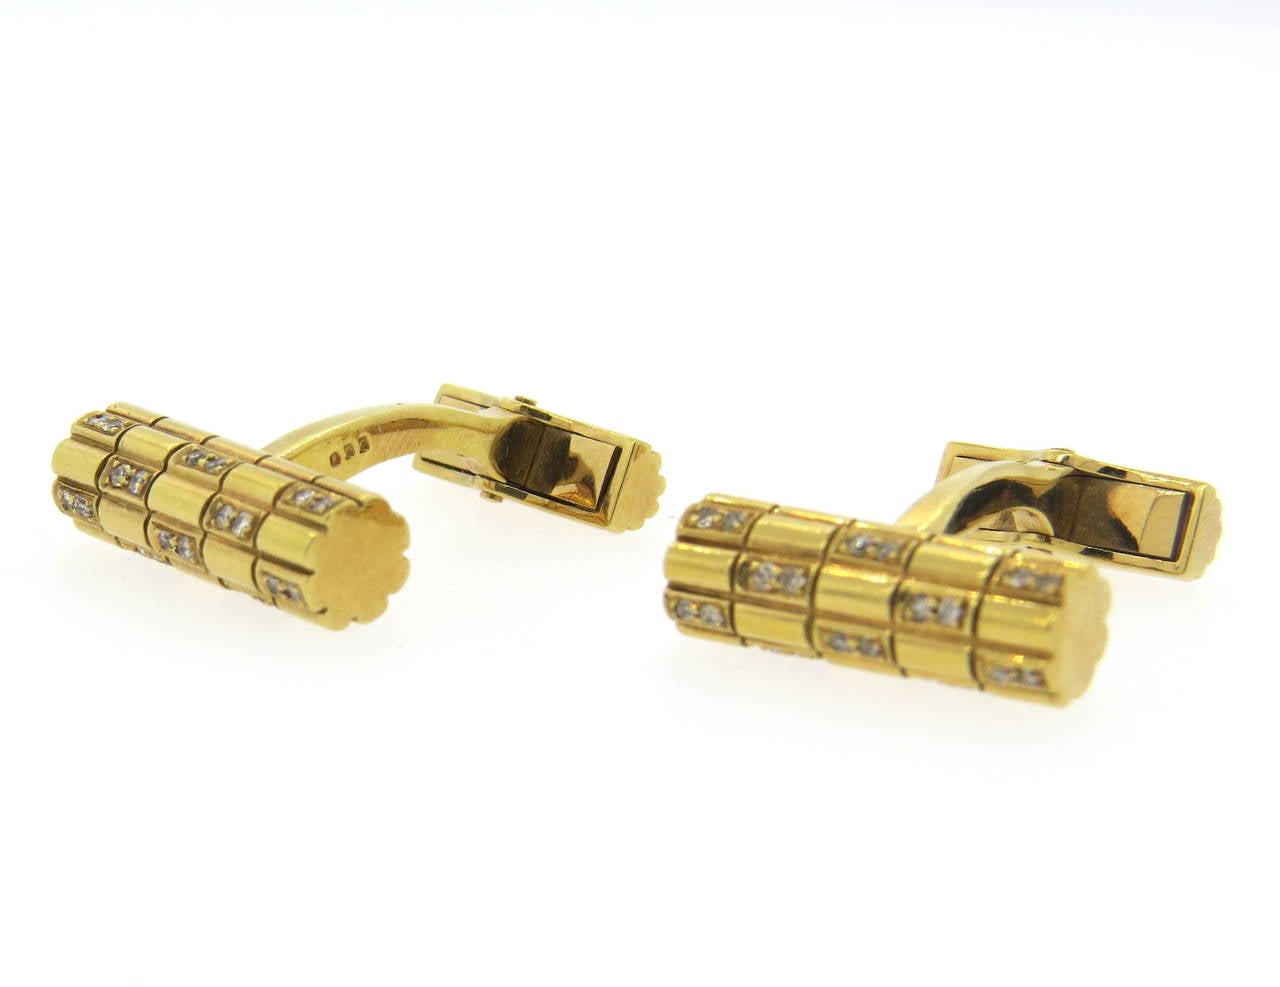 18k gold cufflinks set with diamonds. Top measures 18mm x 6mm. Weight - 12.7 grams